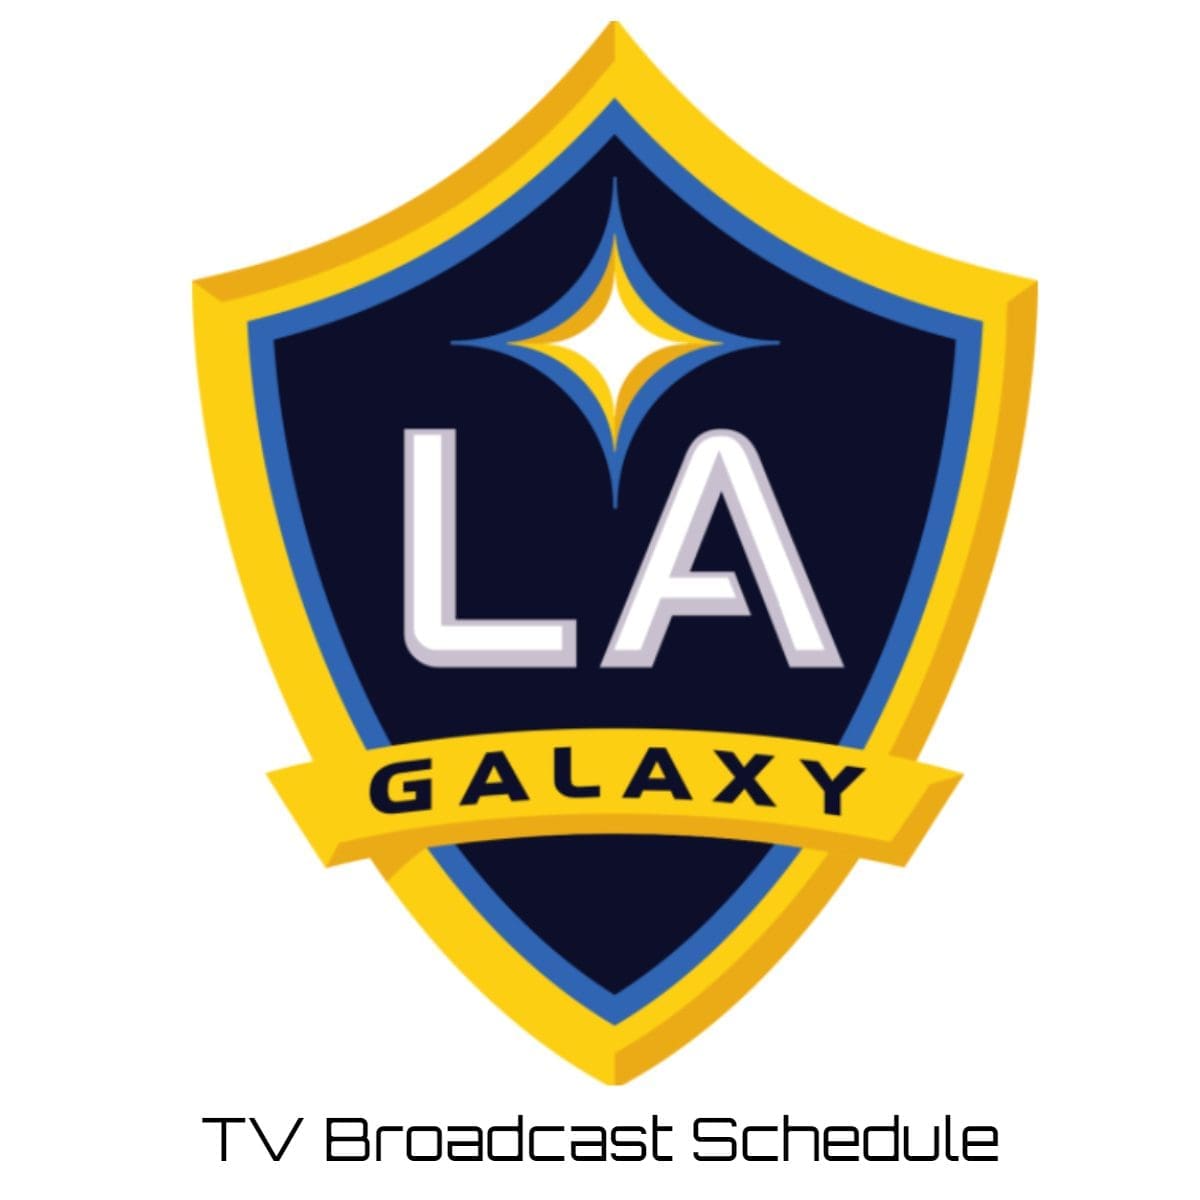 LA Galaxy TV Broadcast Schedule